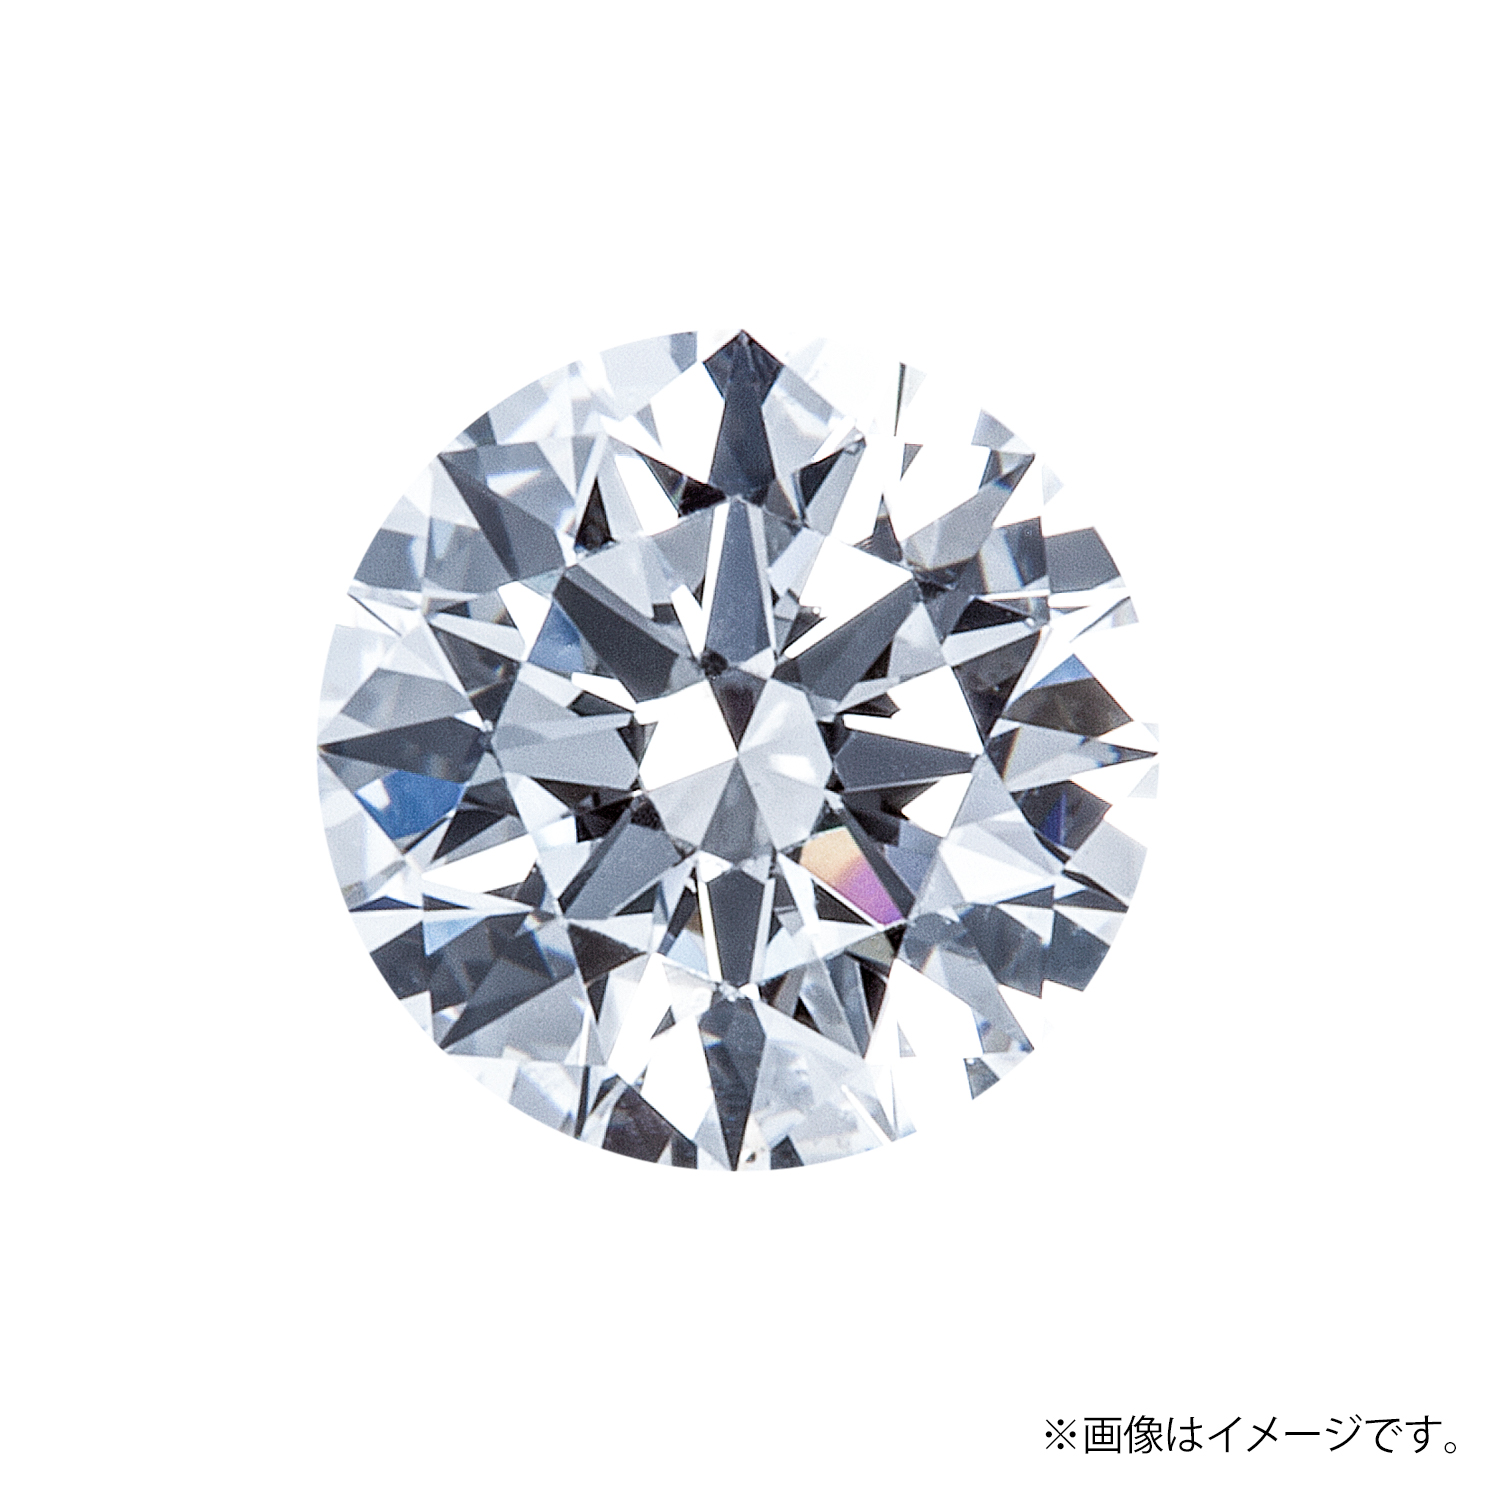 0.210ct Round ダイヤモンド / D / VVS1 / 3EX H&C